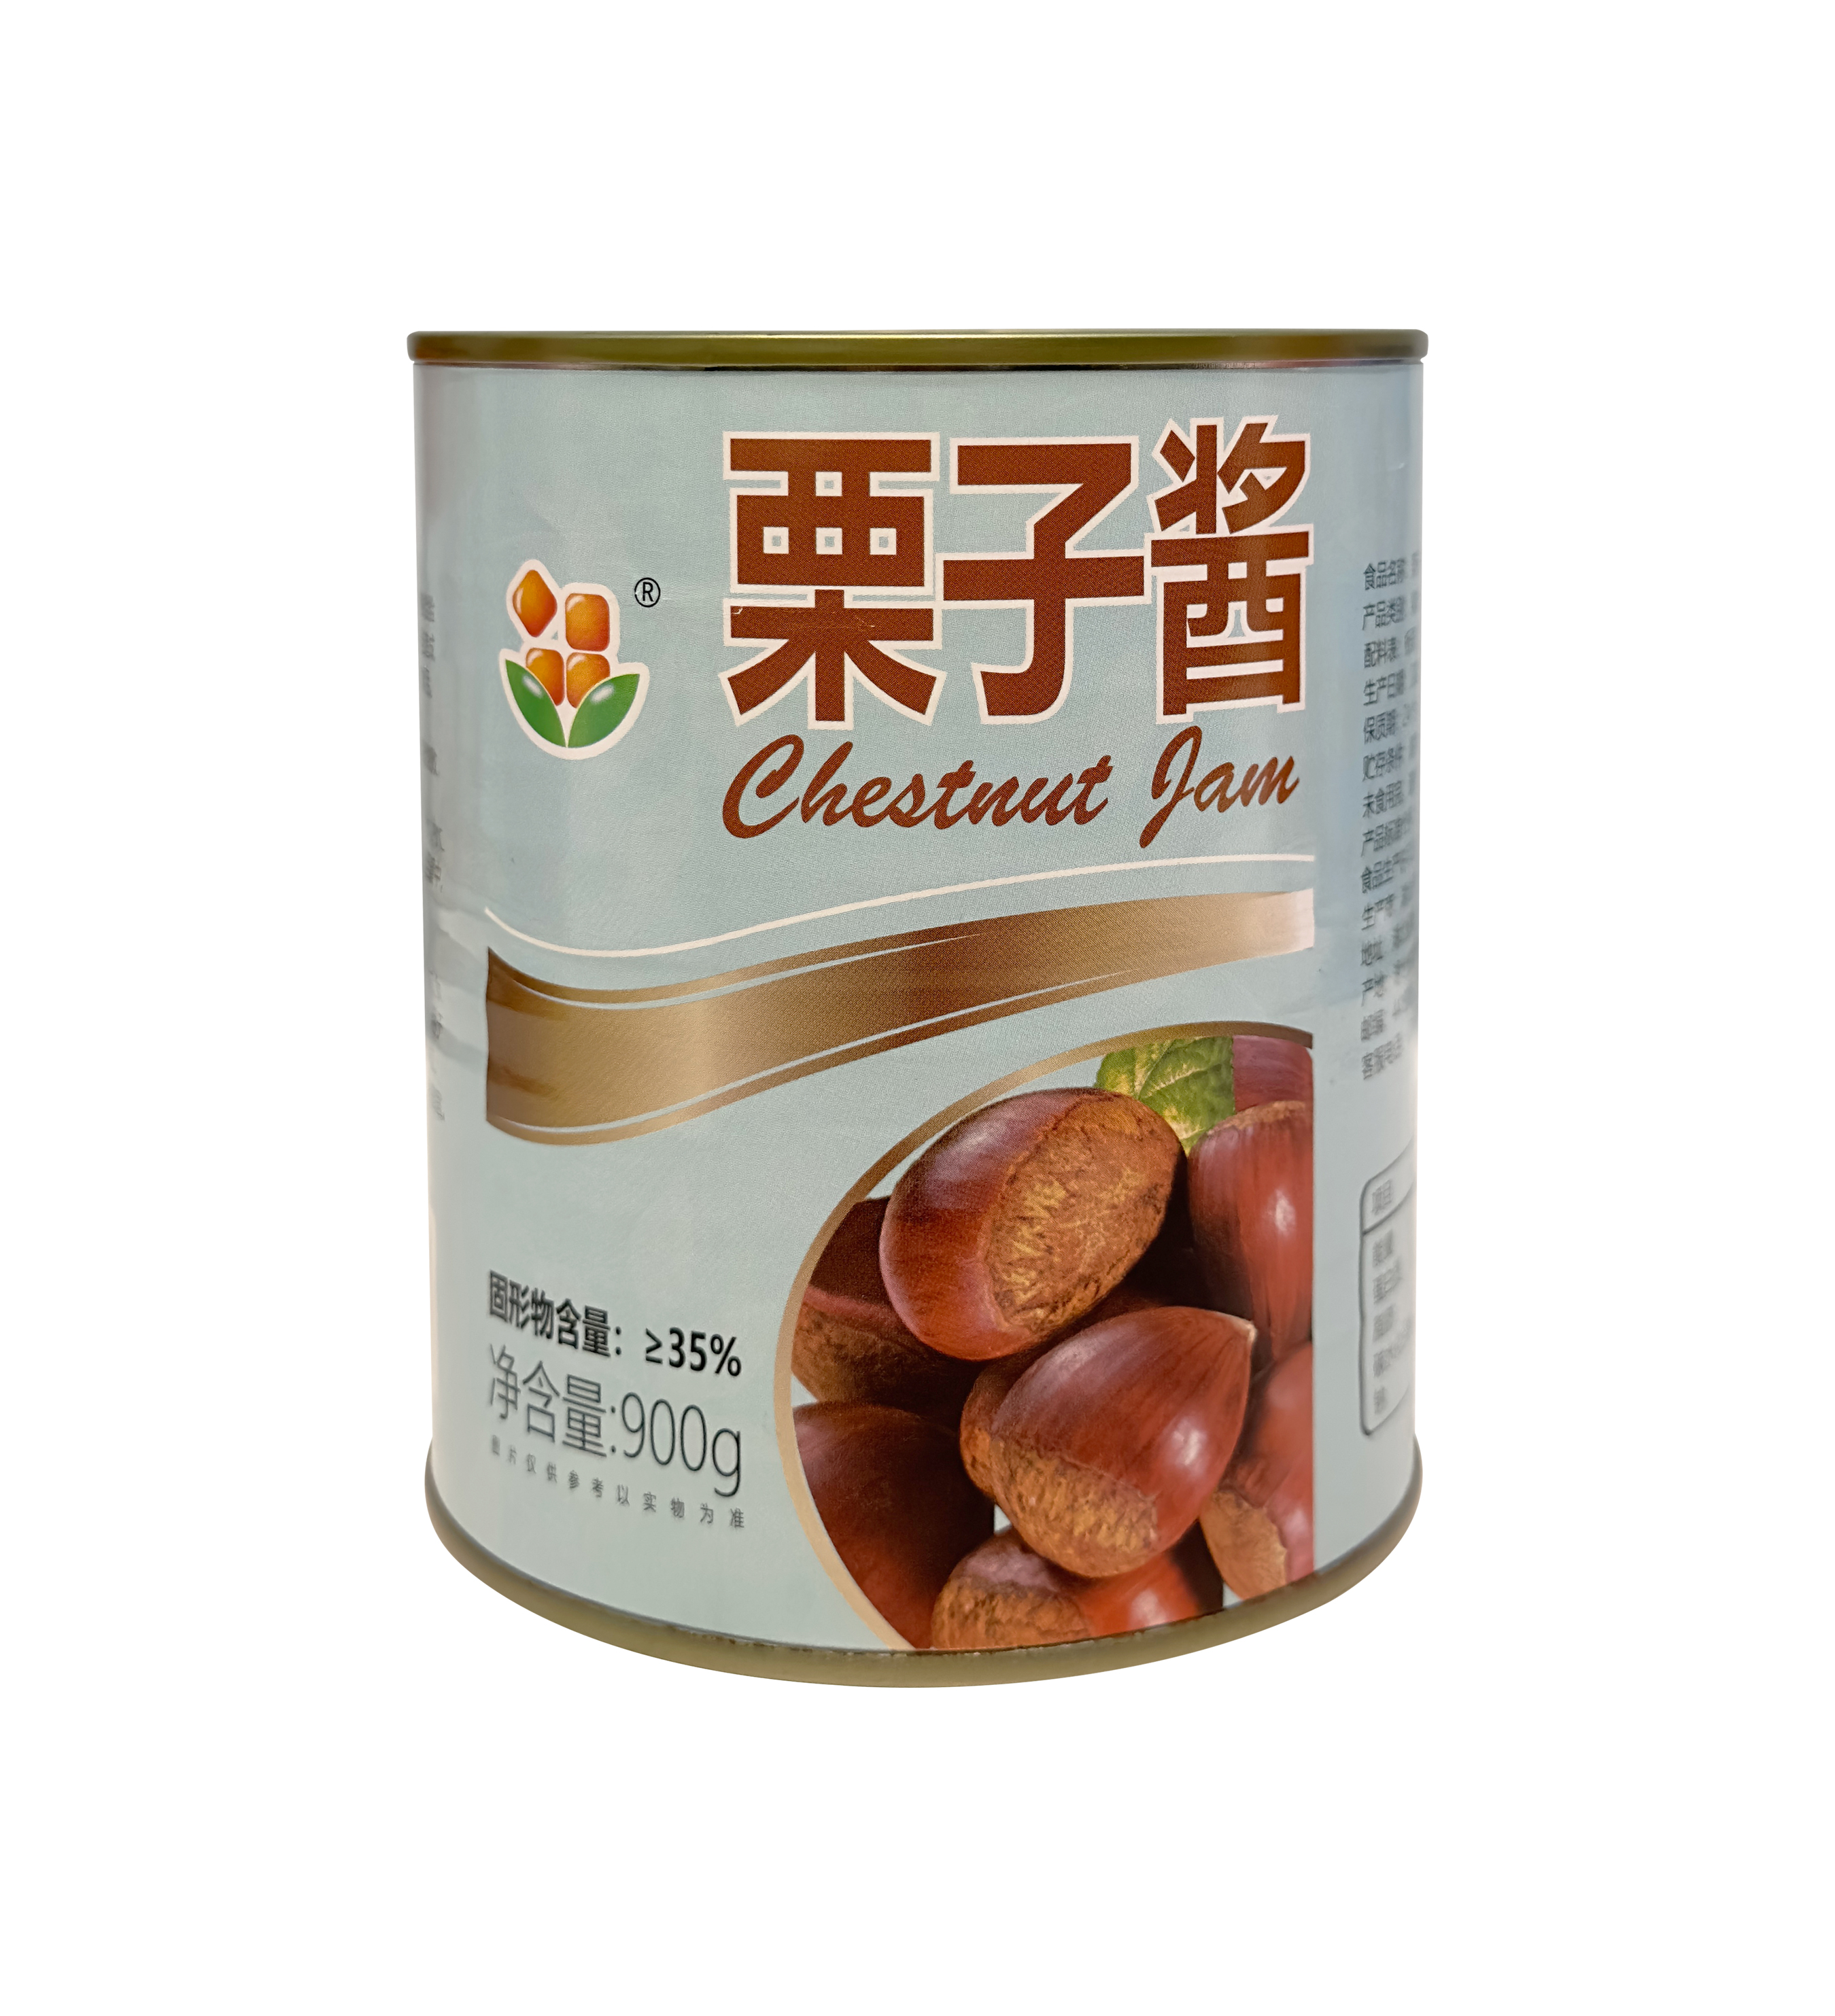 Canned chestnut jam